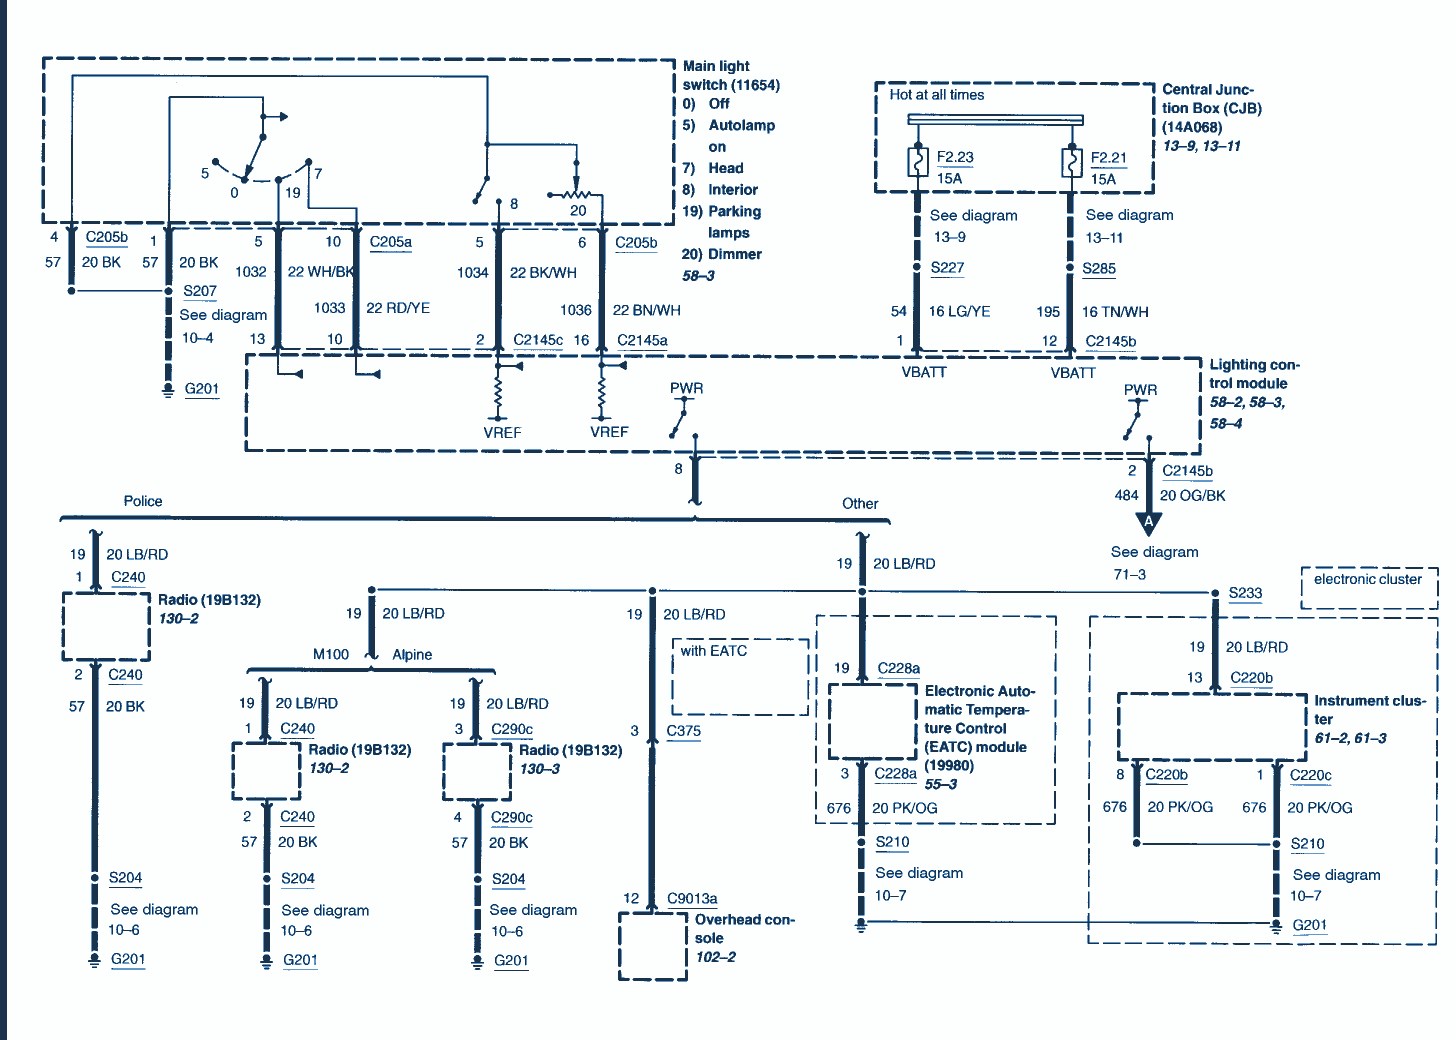 Light circuit diagram: September 2013